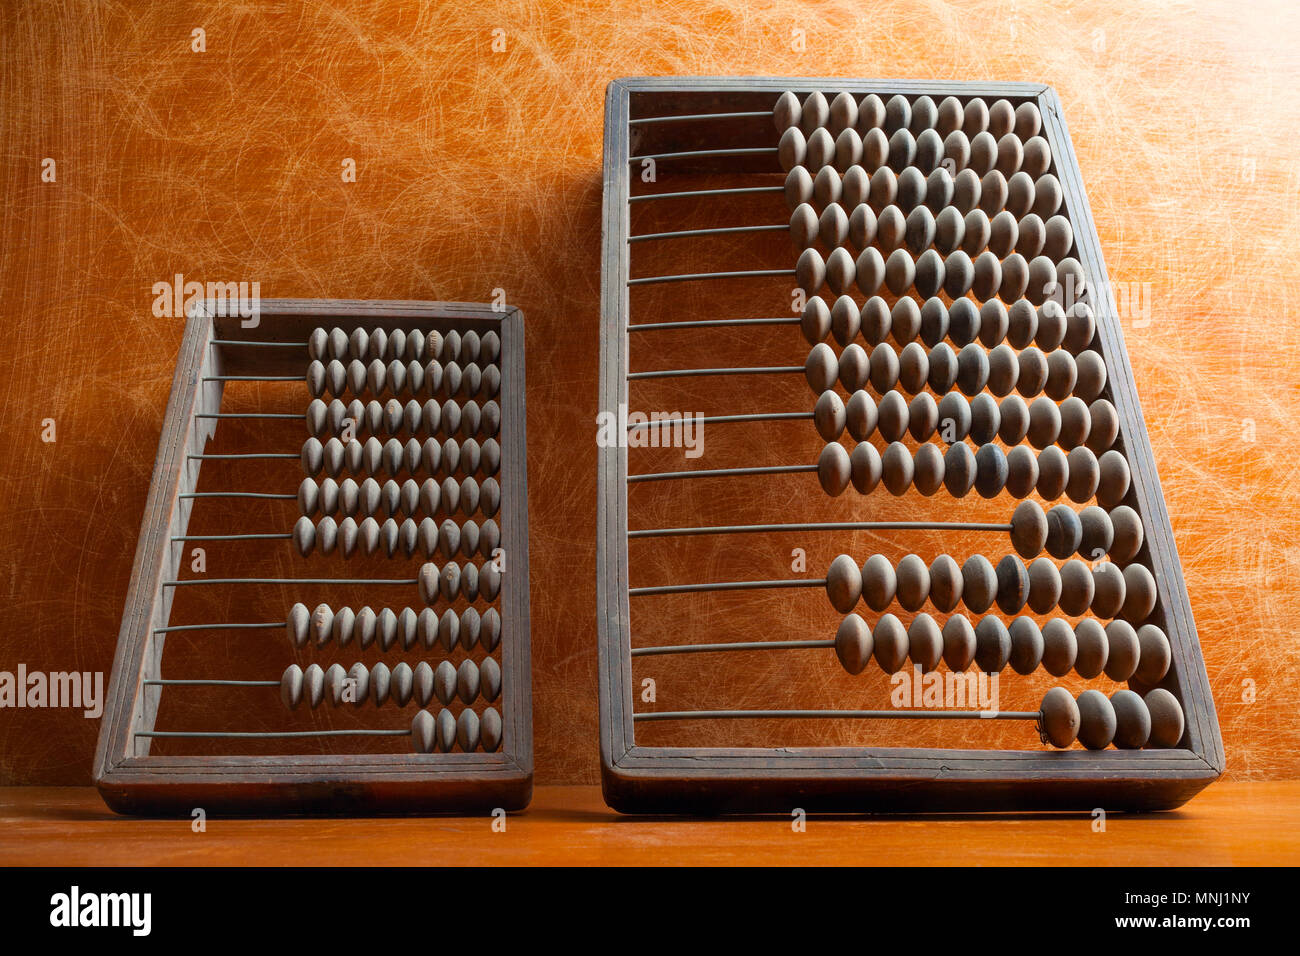 Two old retro calkulators. Two abacus. Stock Photo